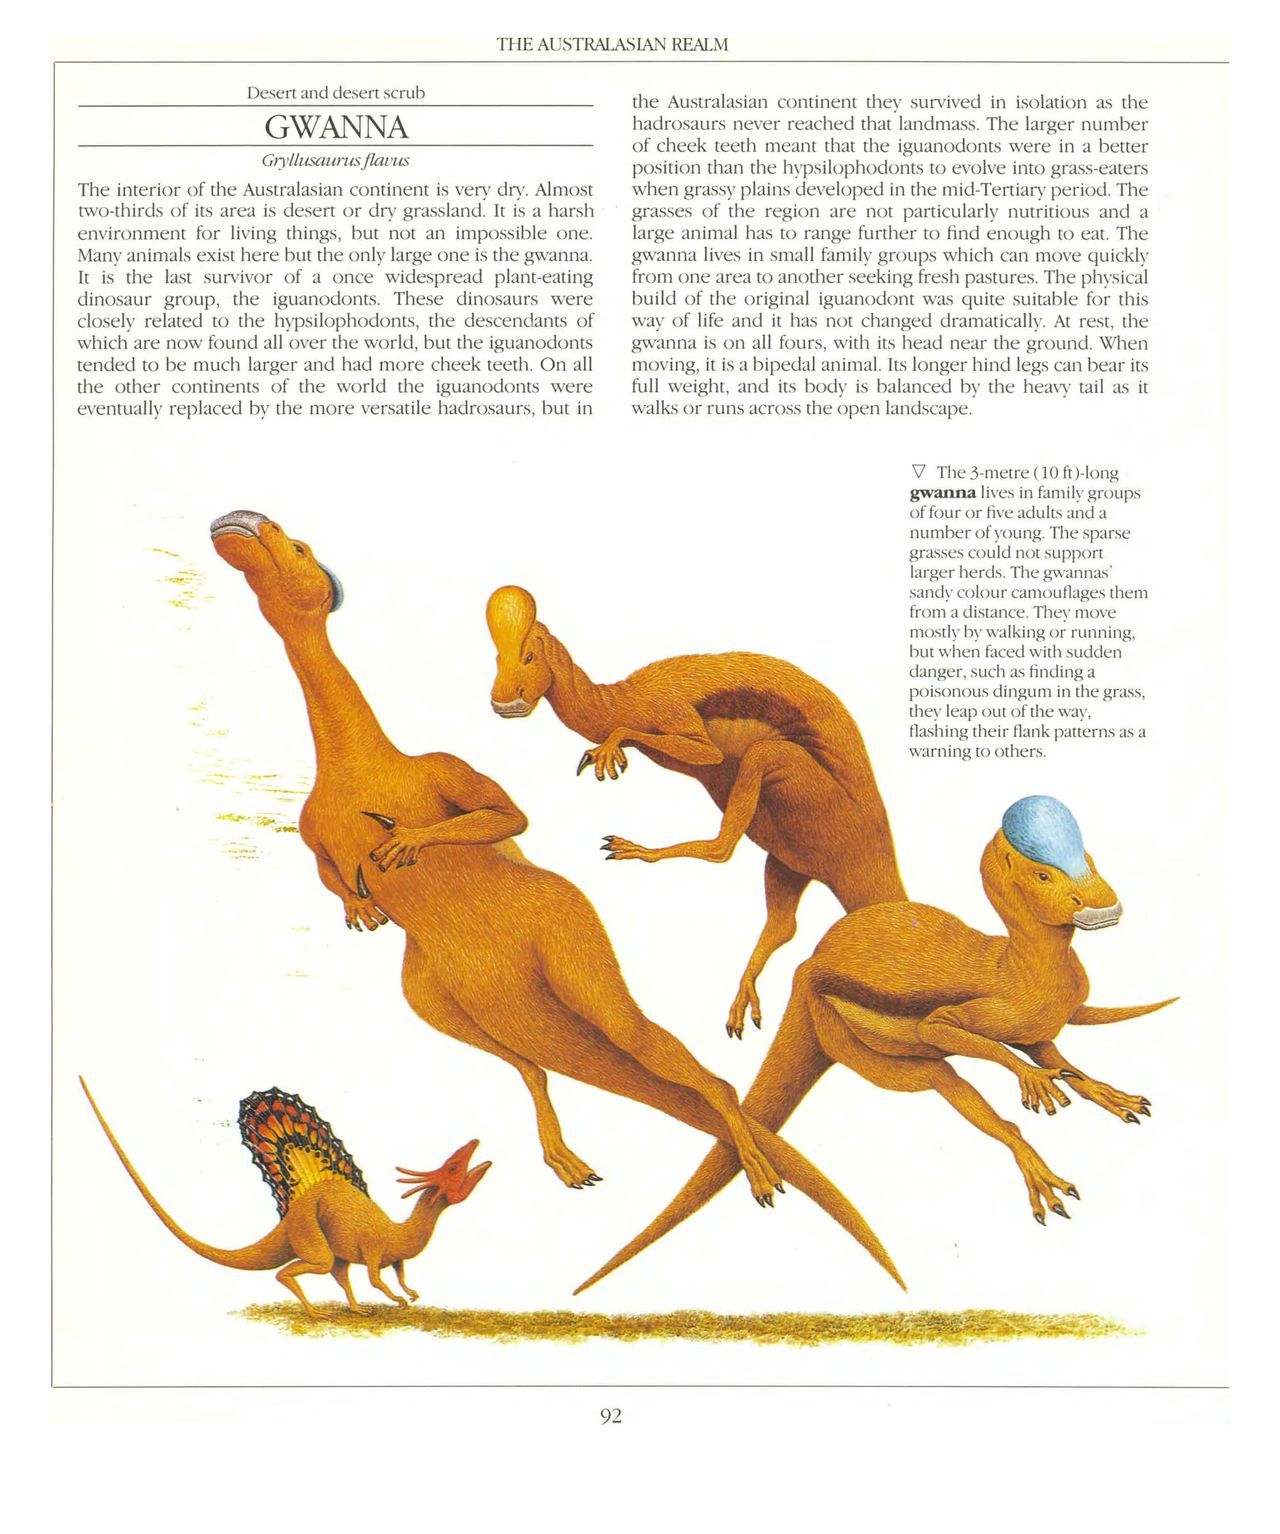 [Dougal Dixon] The New Dinosaurs: An Alternative Evolution 93